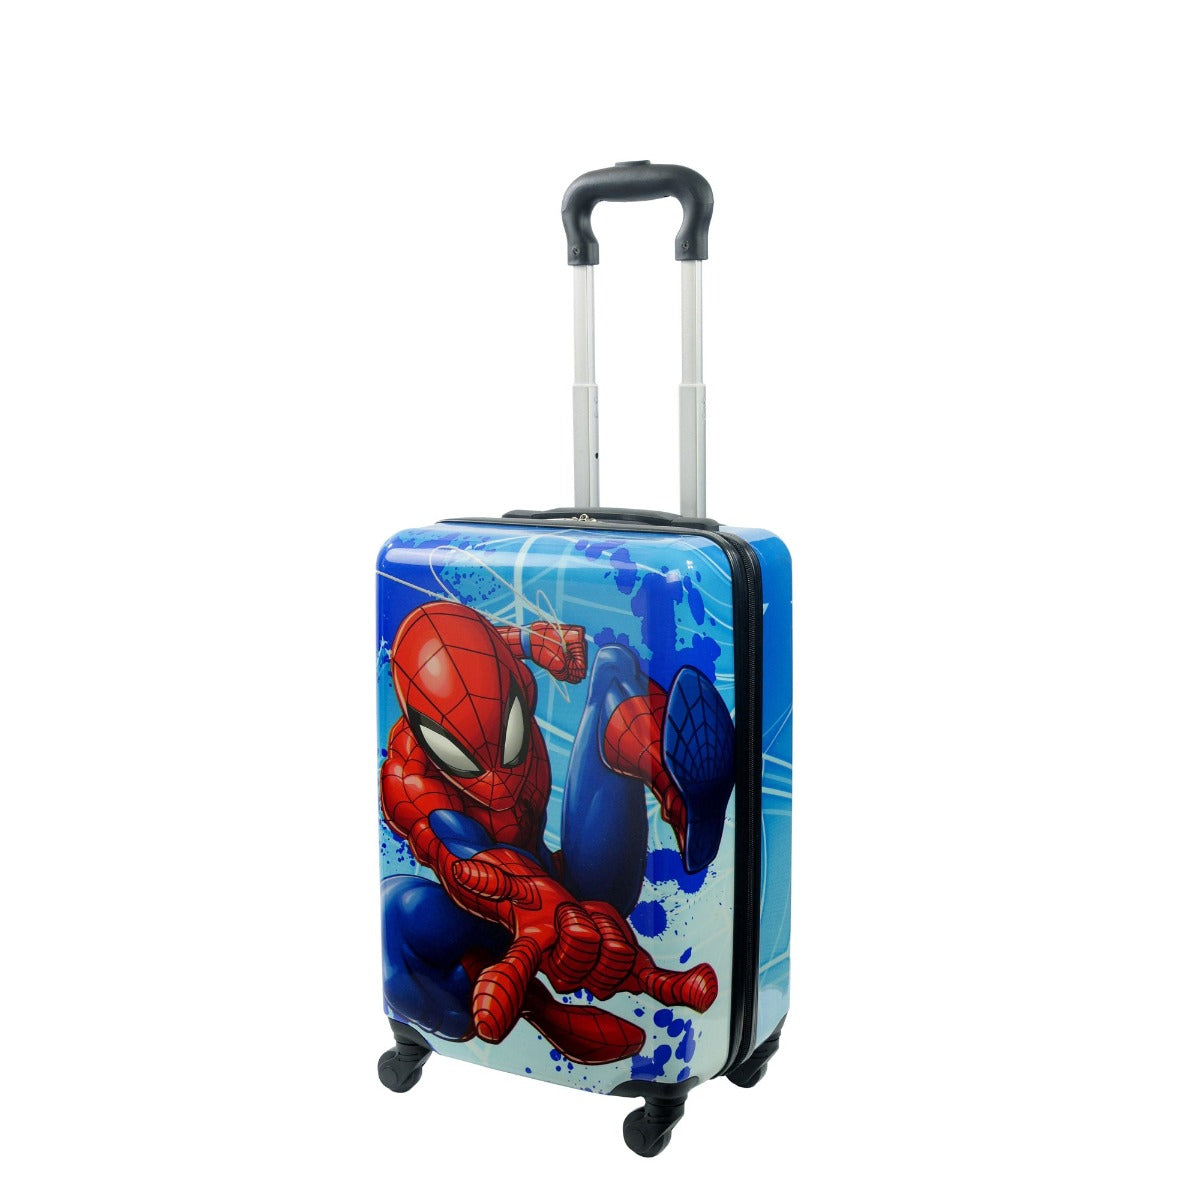 FUL Marvel Spider-Man 21 Inch Kids Rolling Luggage, Hardshell